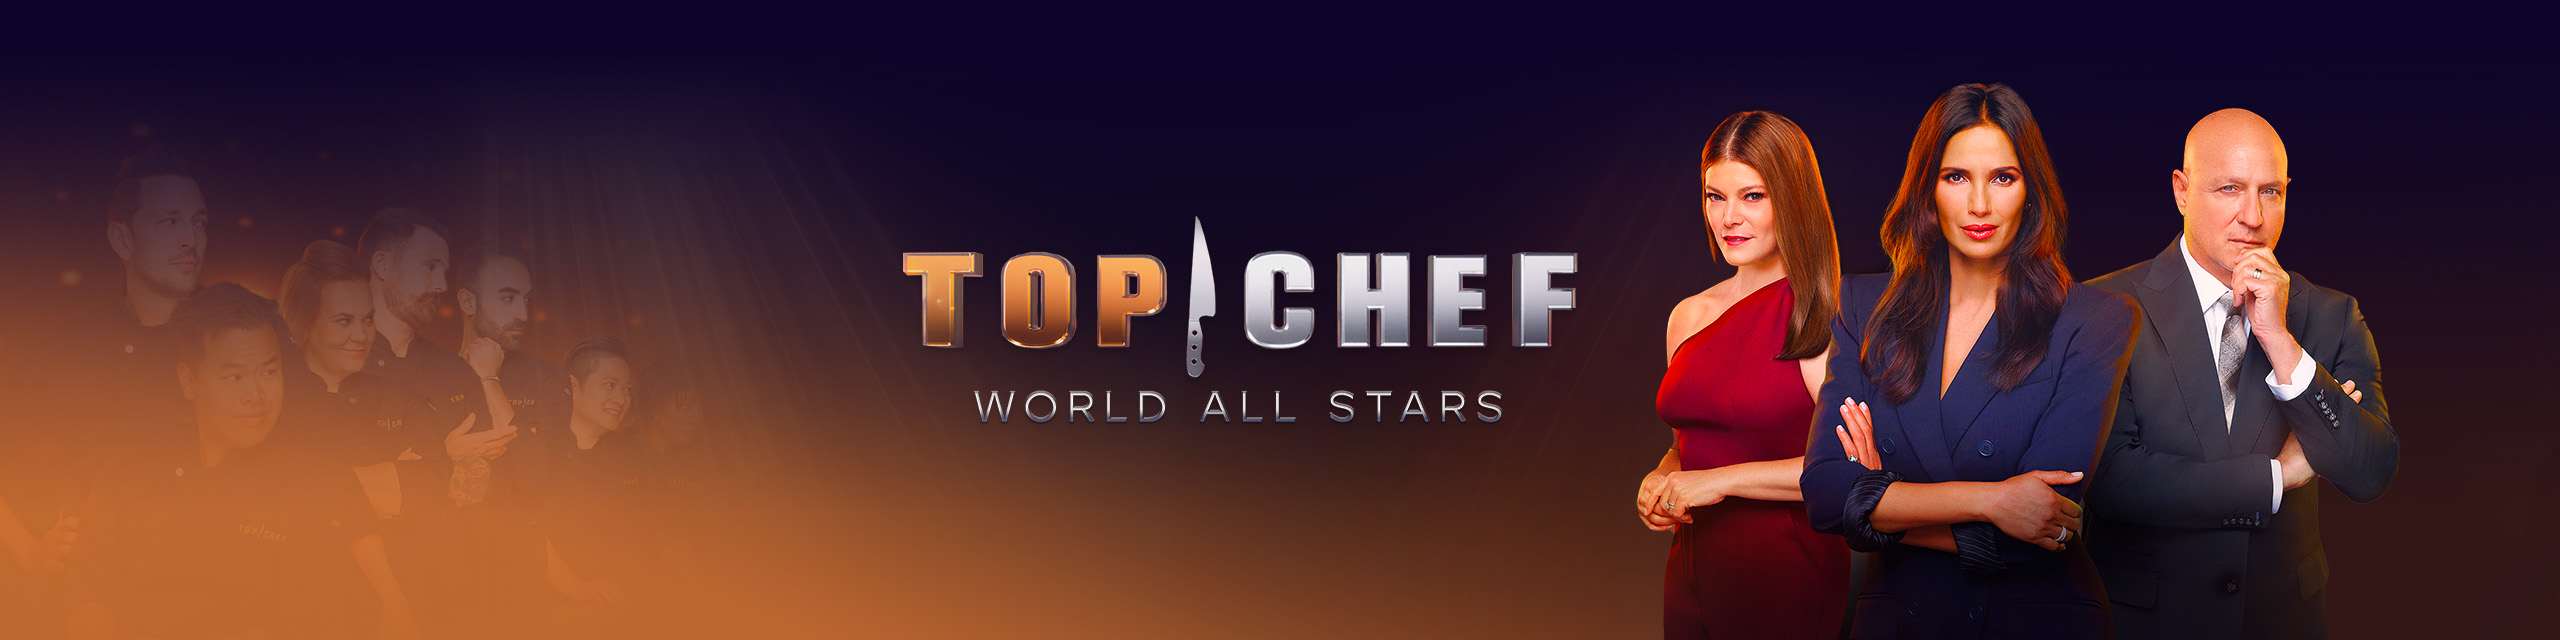 Top Chef World All Stars